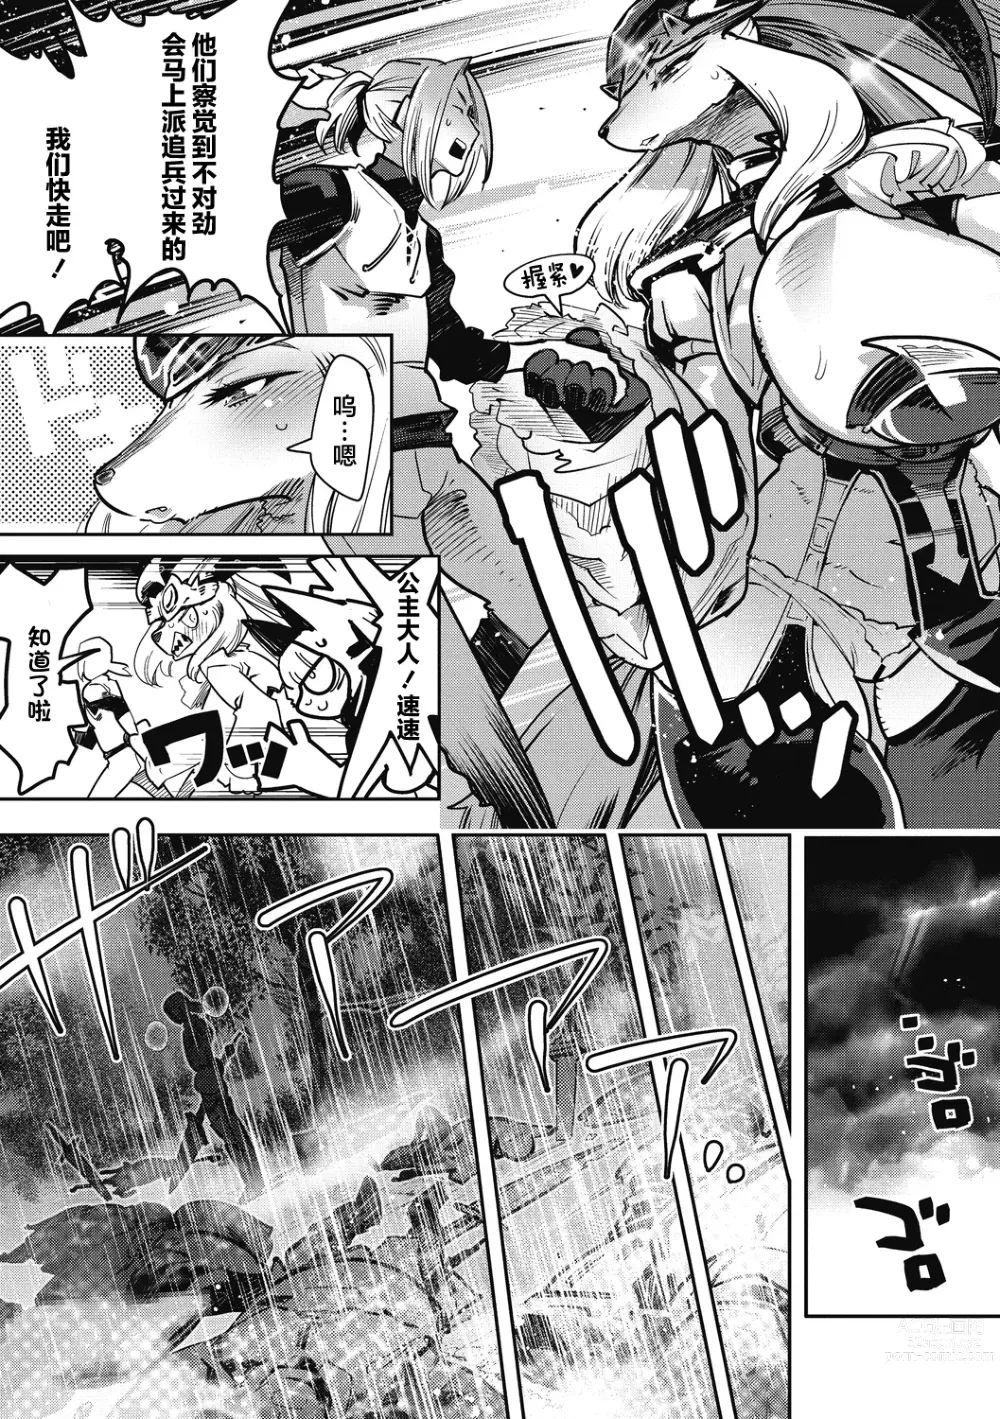 Page 4 of manga Yuusha ha Maou to Koi shitai Saishuuwa